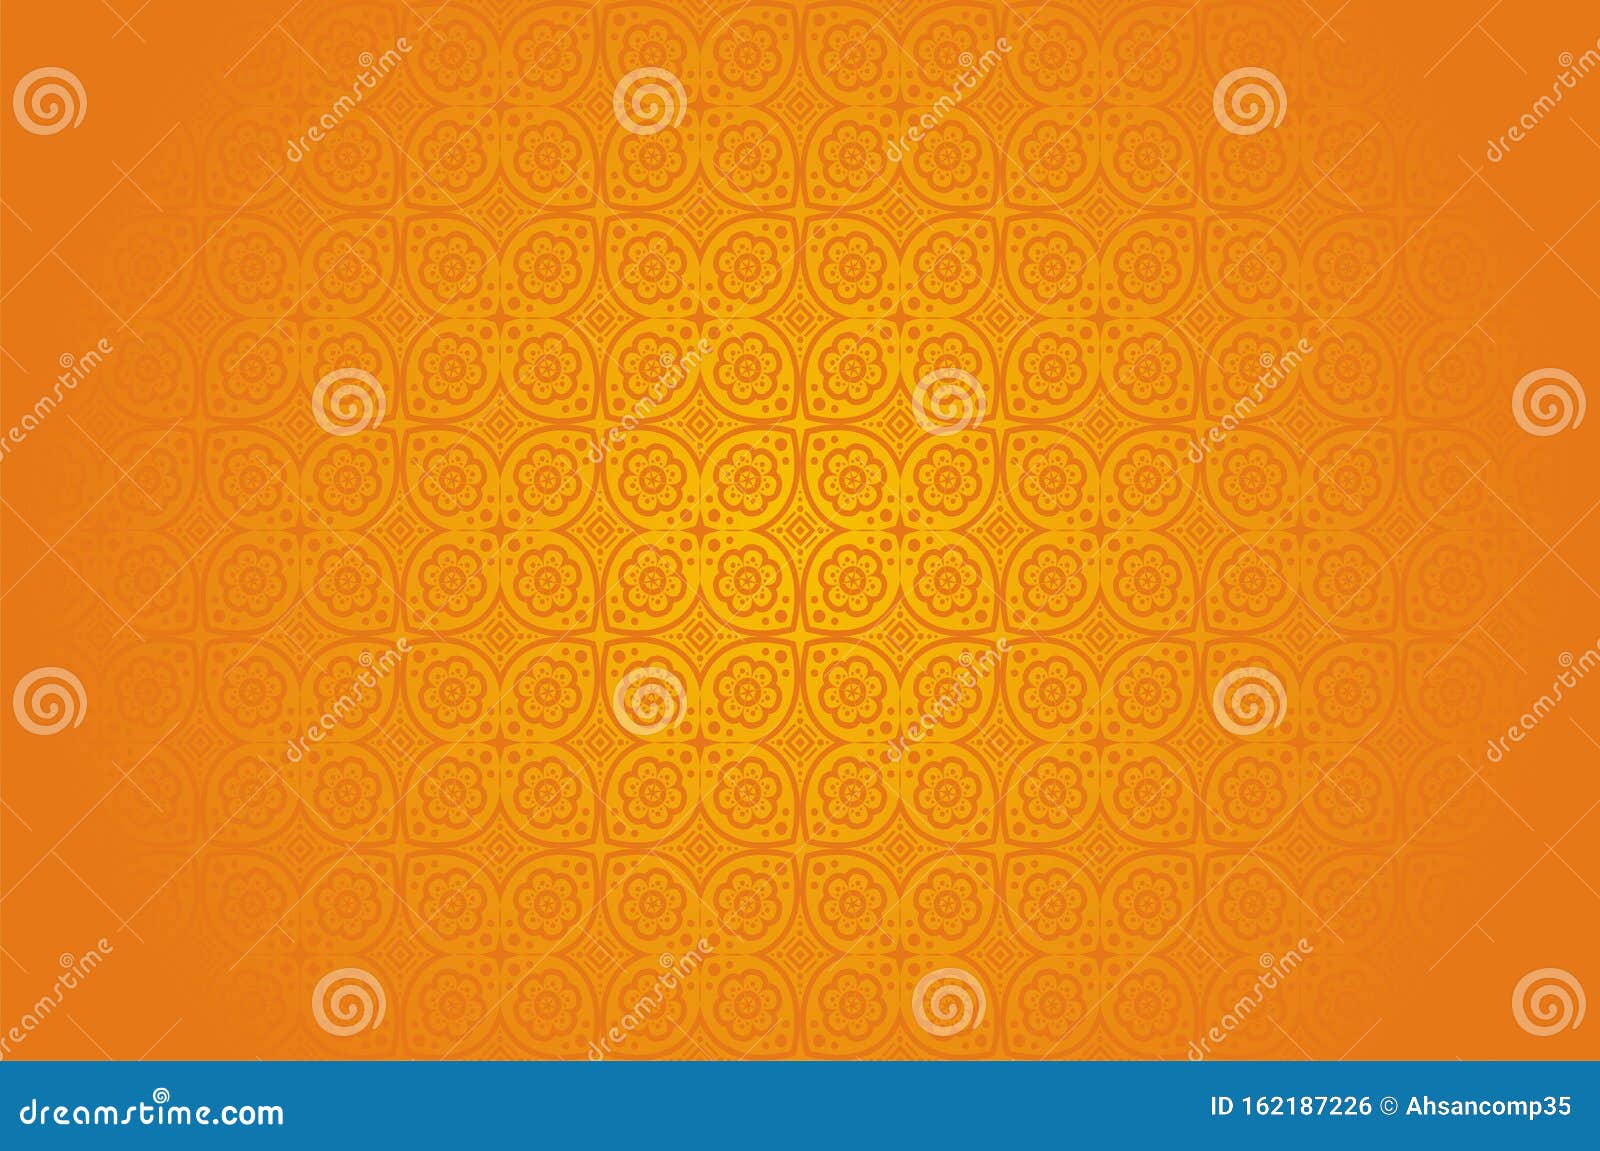 Wallpaper Batik Background Pattern Ornament Hd Stock Illustration Illustration Of Decorative Geometric 162187226